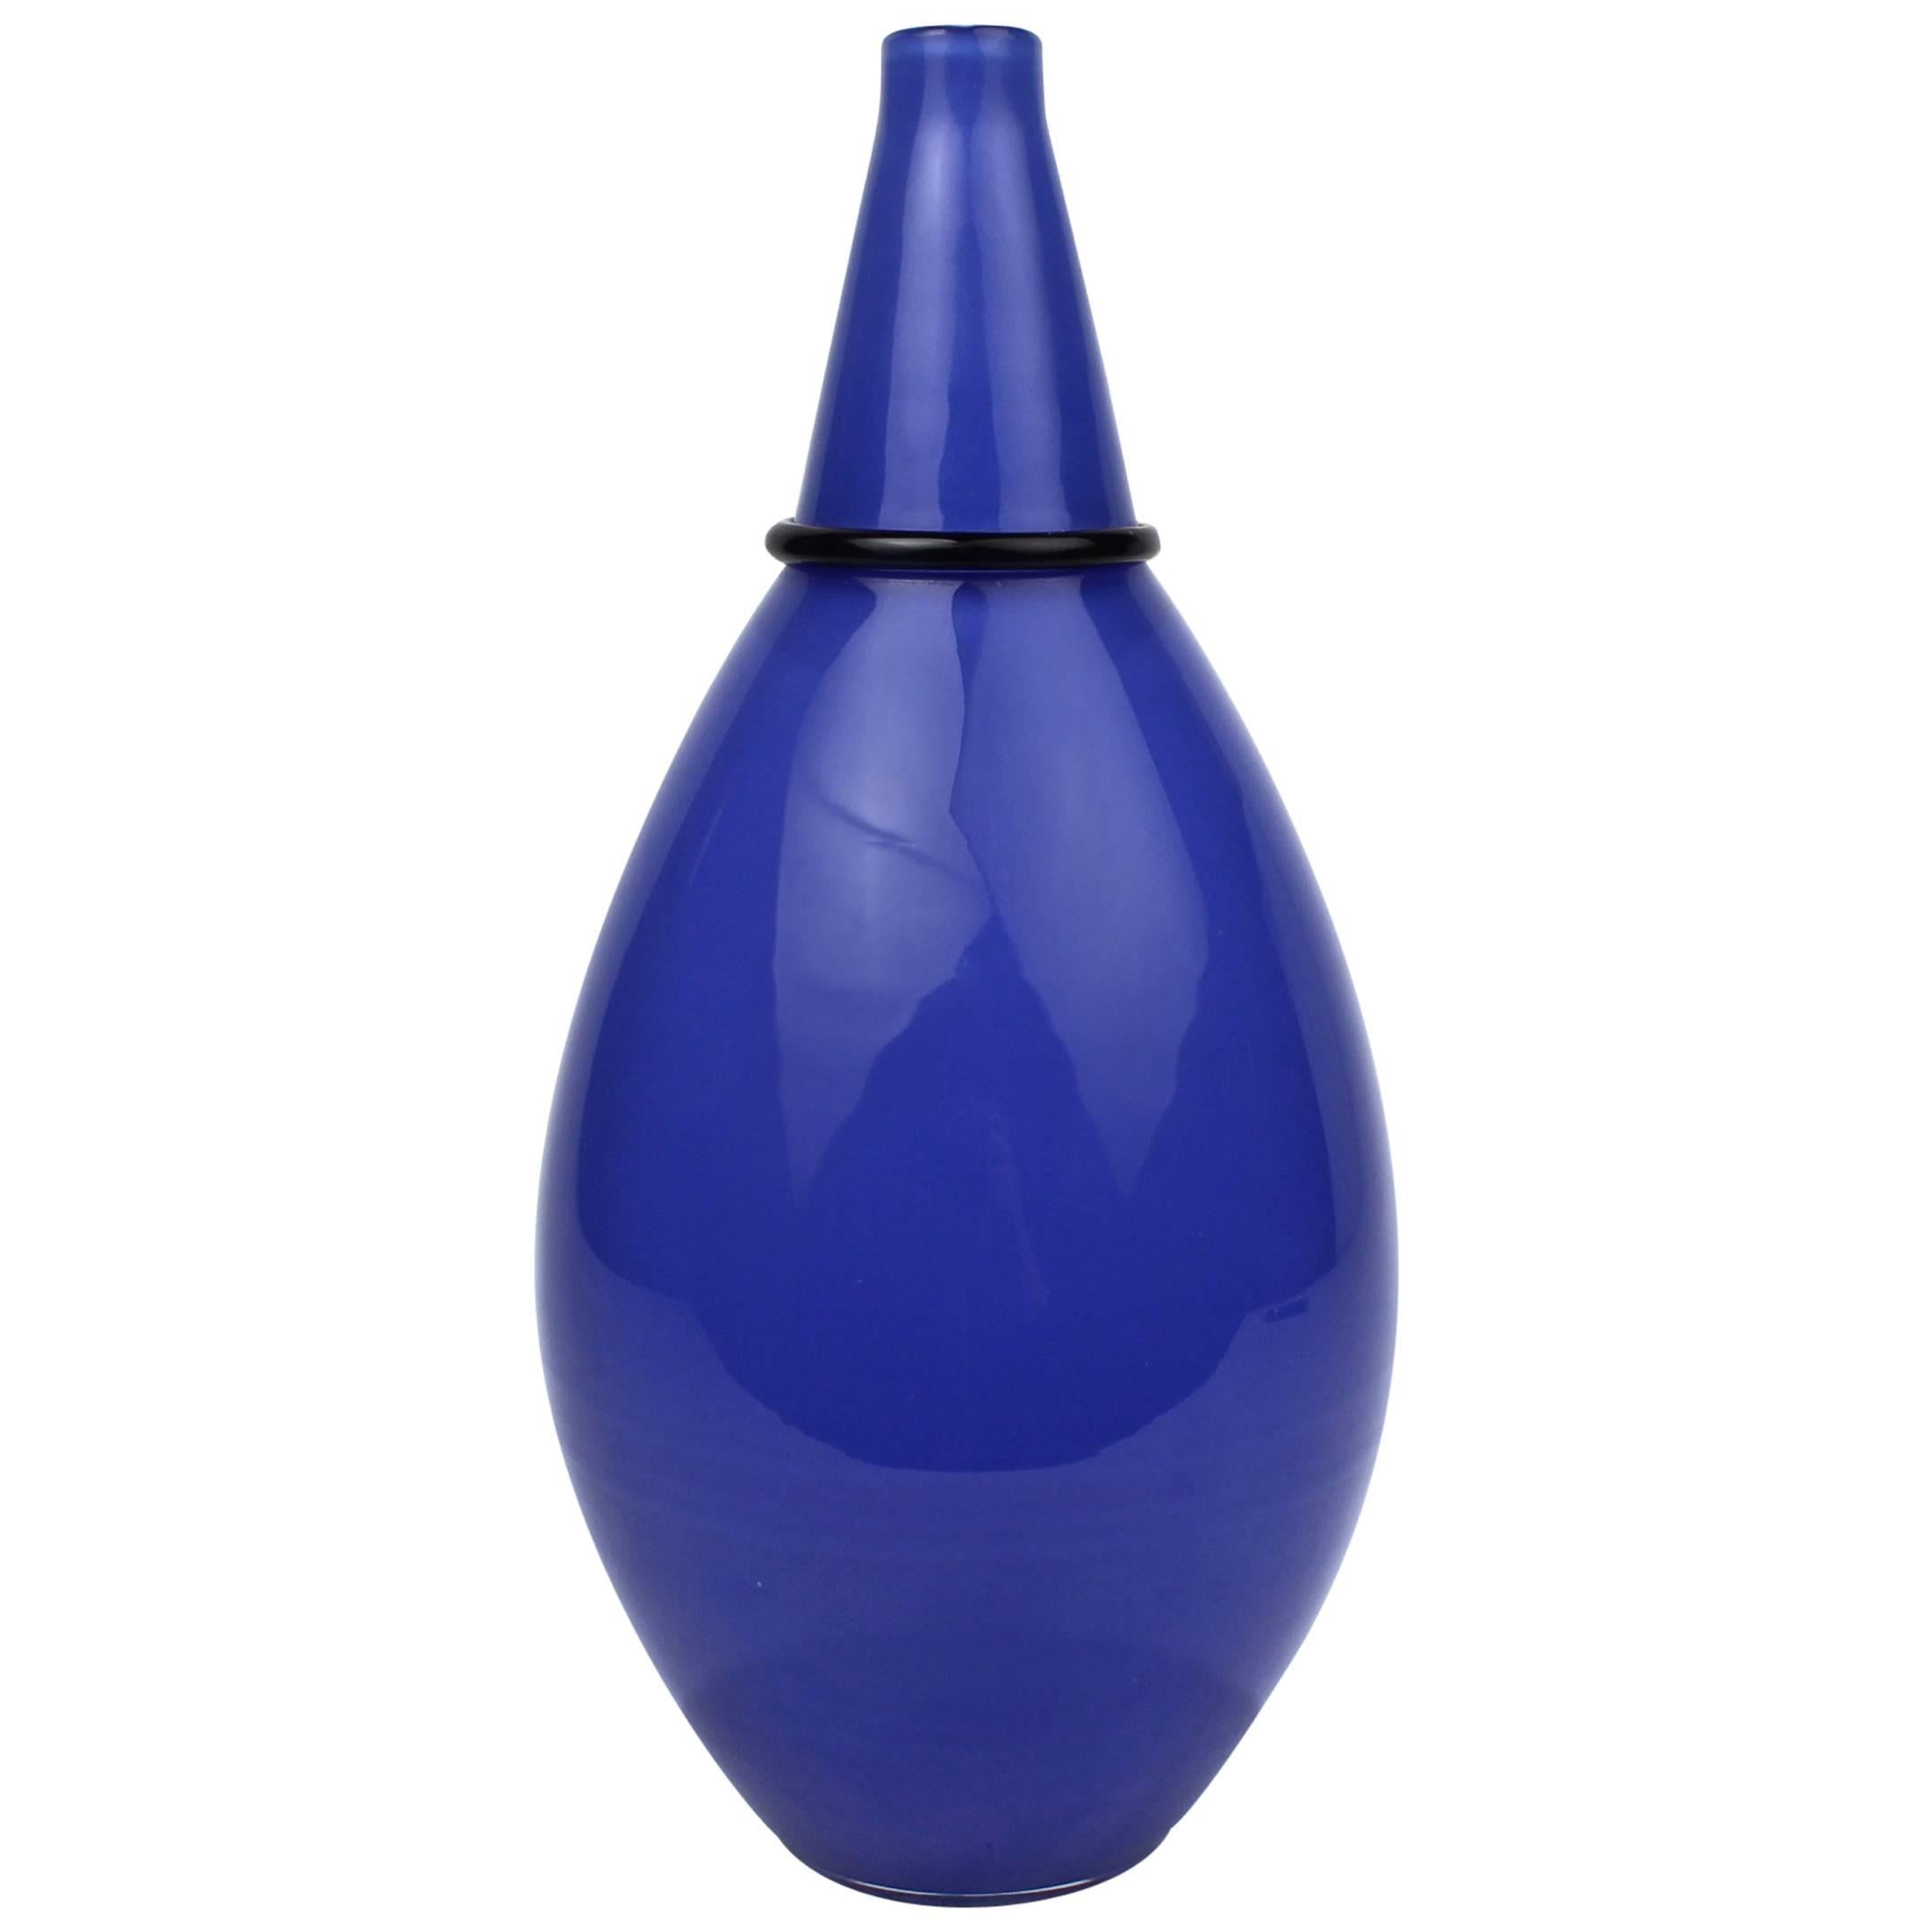 Blue Murano Glass Vase by Tagliapietra & Angelin for Effetre International, 1985